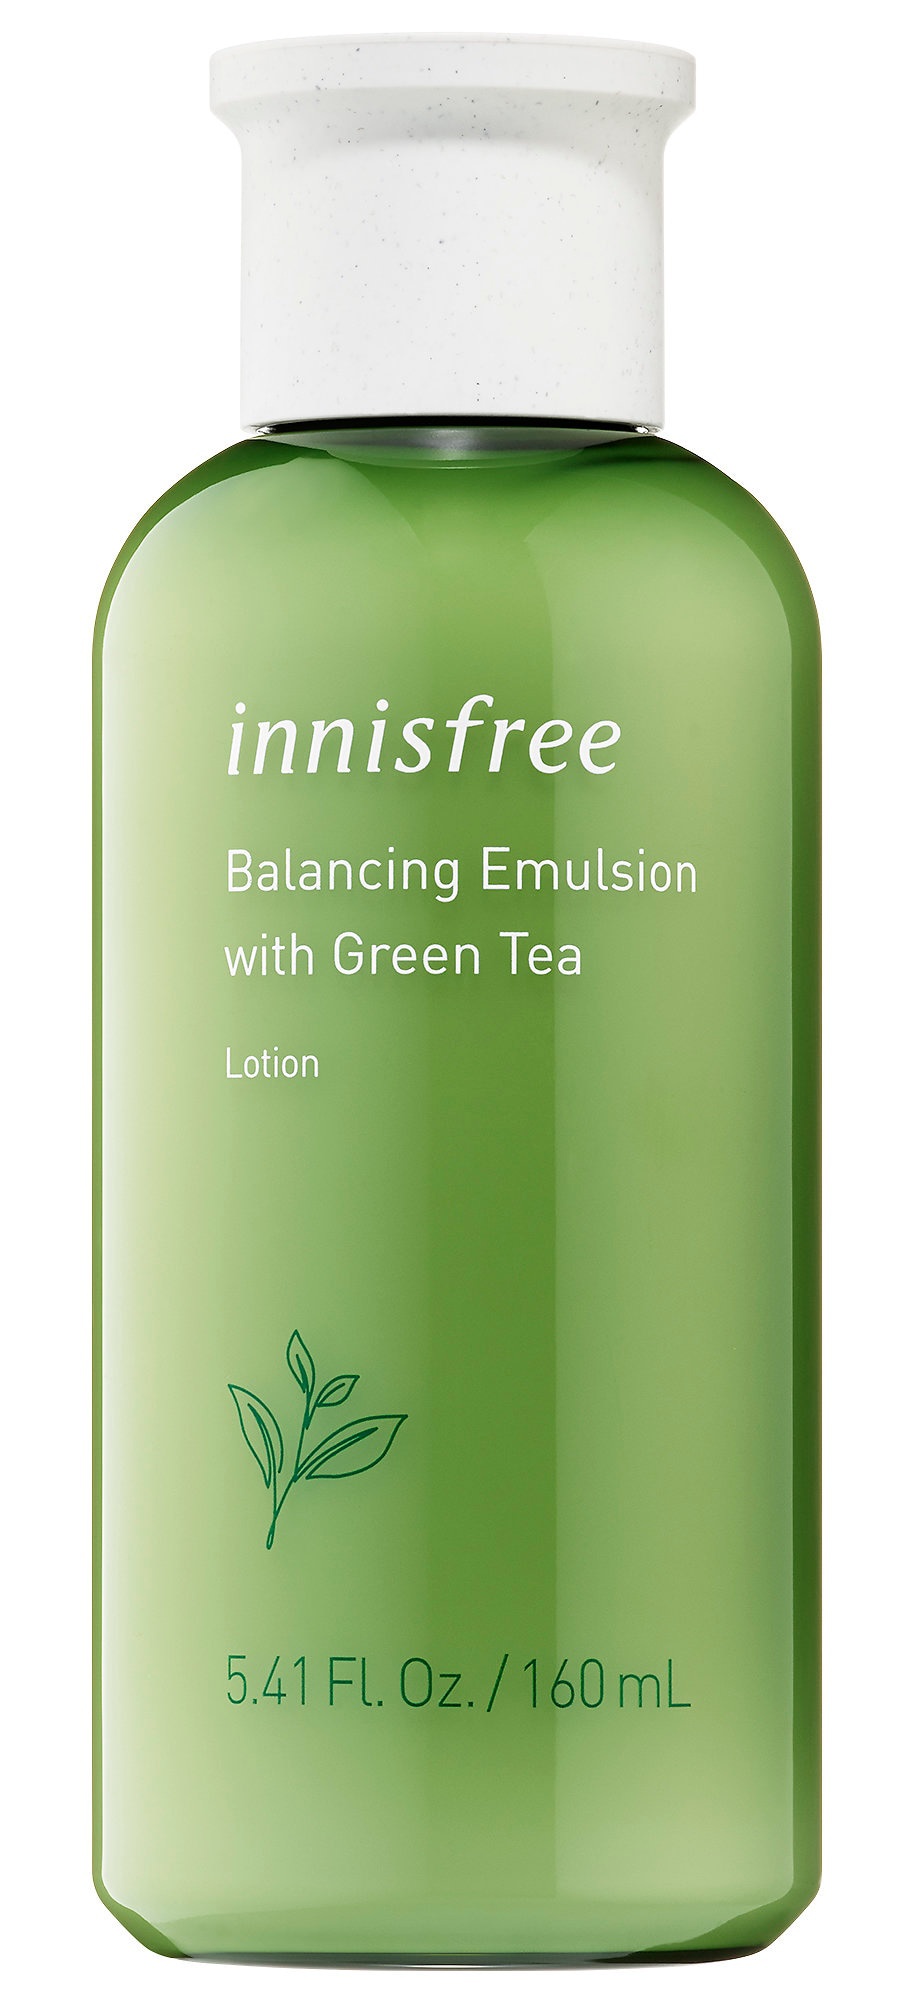 innisfree Green Tea Moisture-Balancing Emulsion